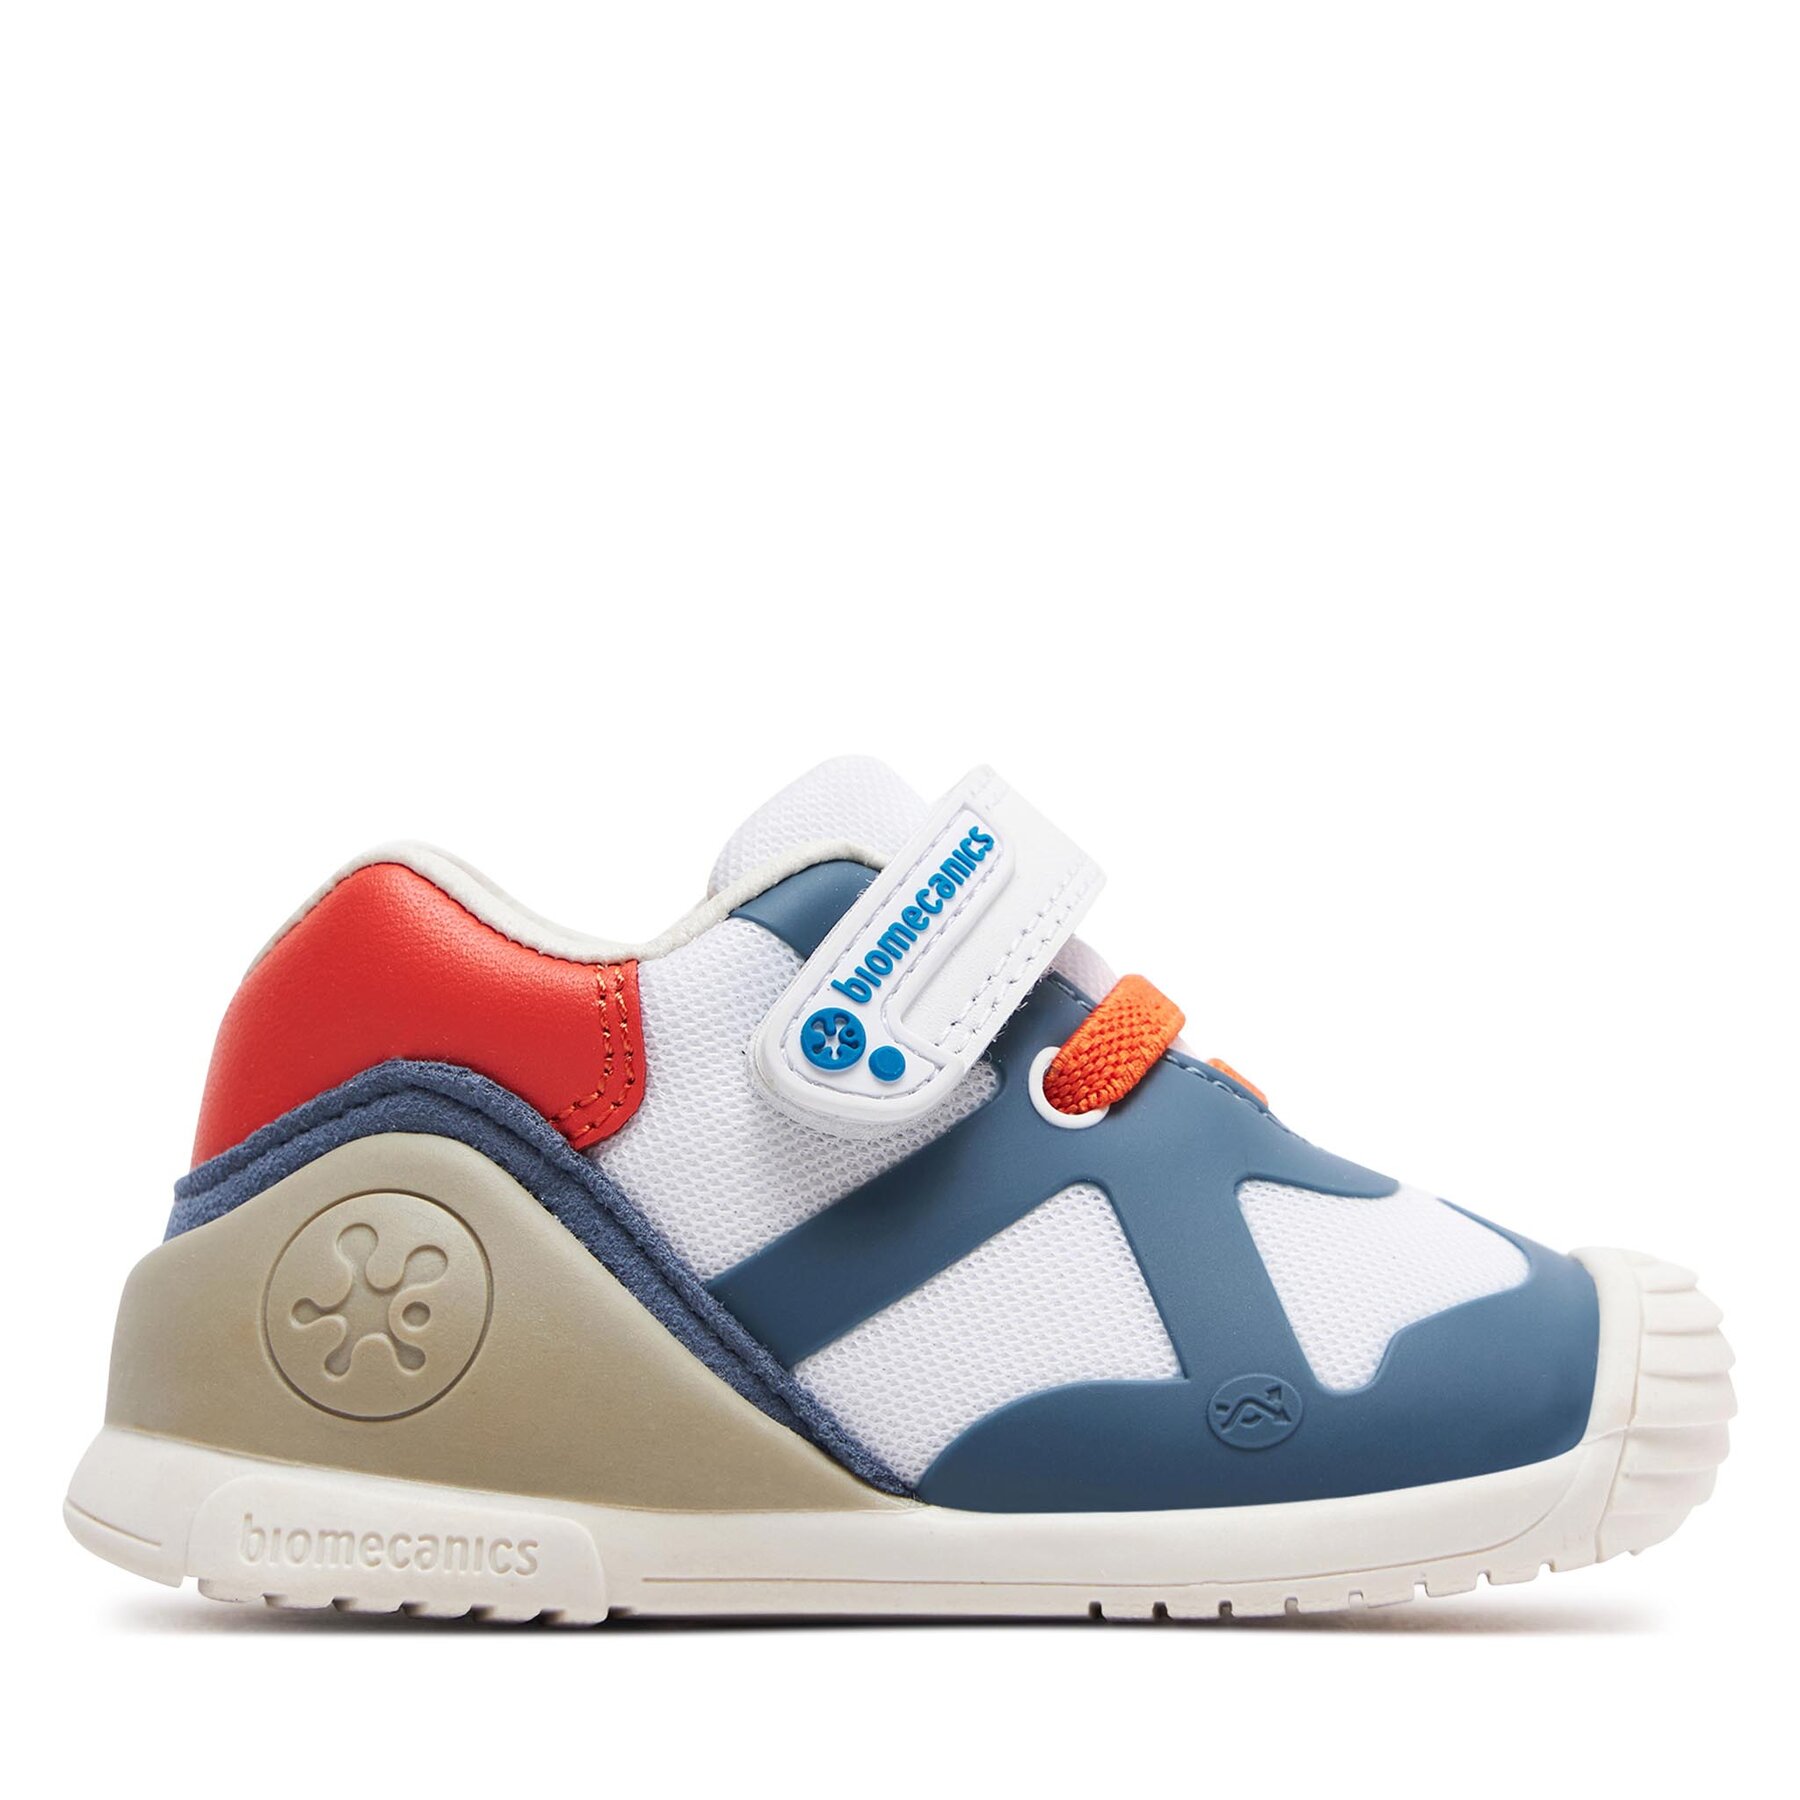 Sneakers Biomecanics 242151 A Blanco Y Naranja